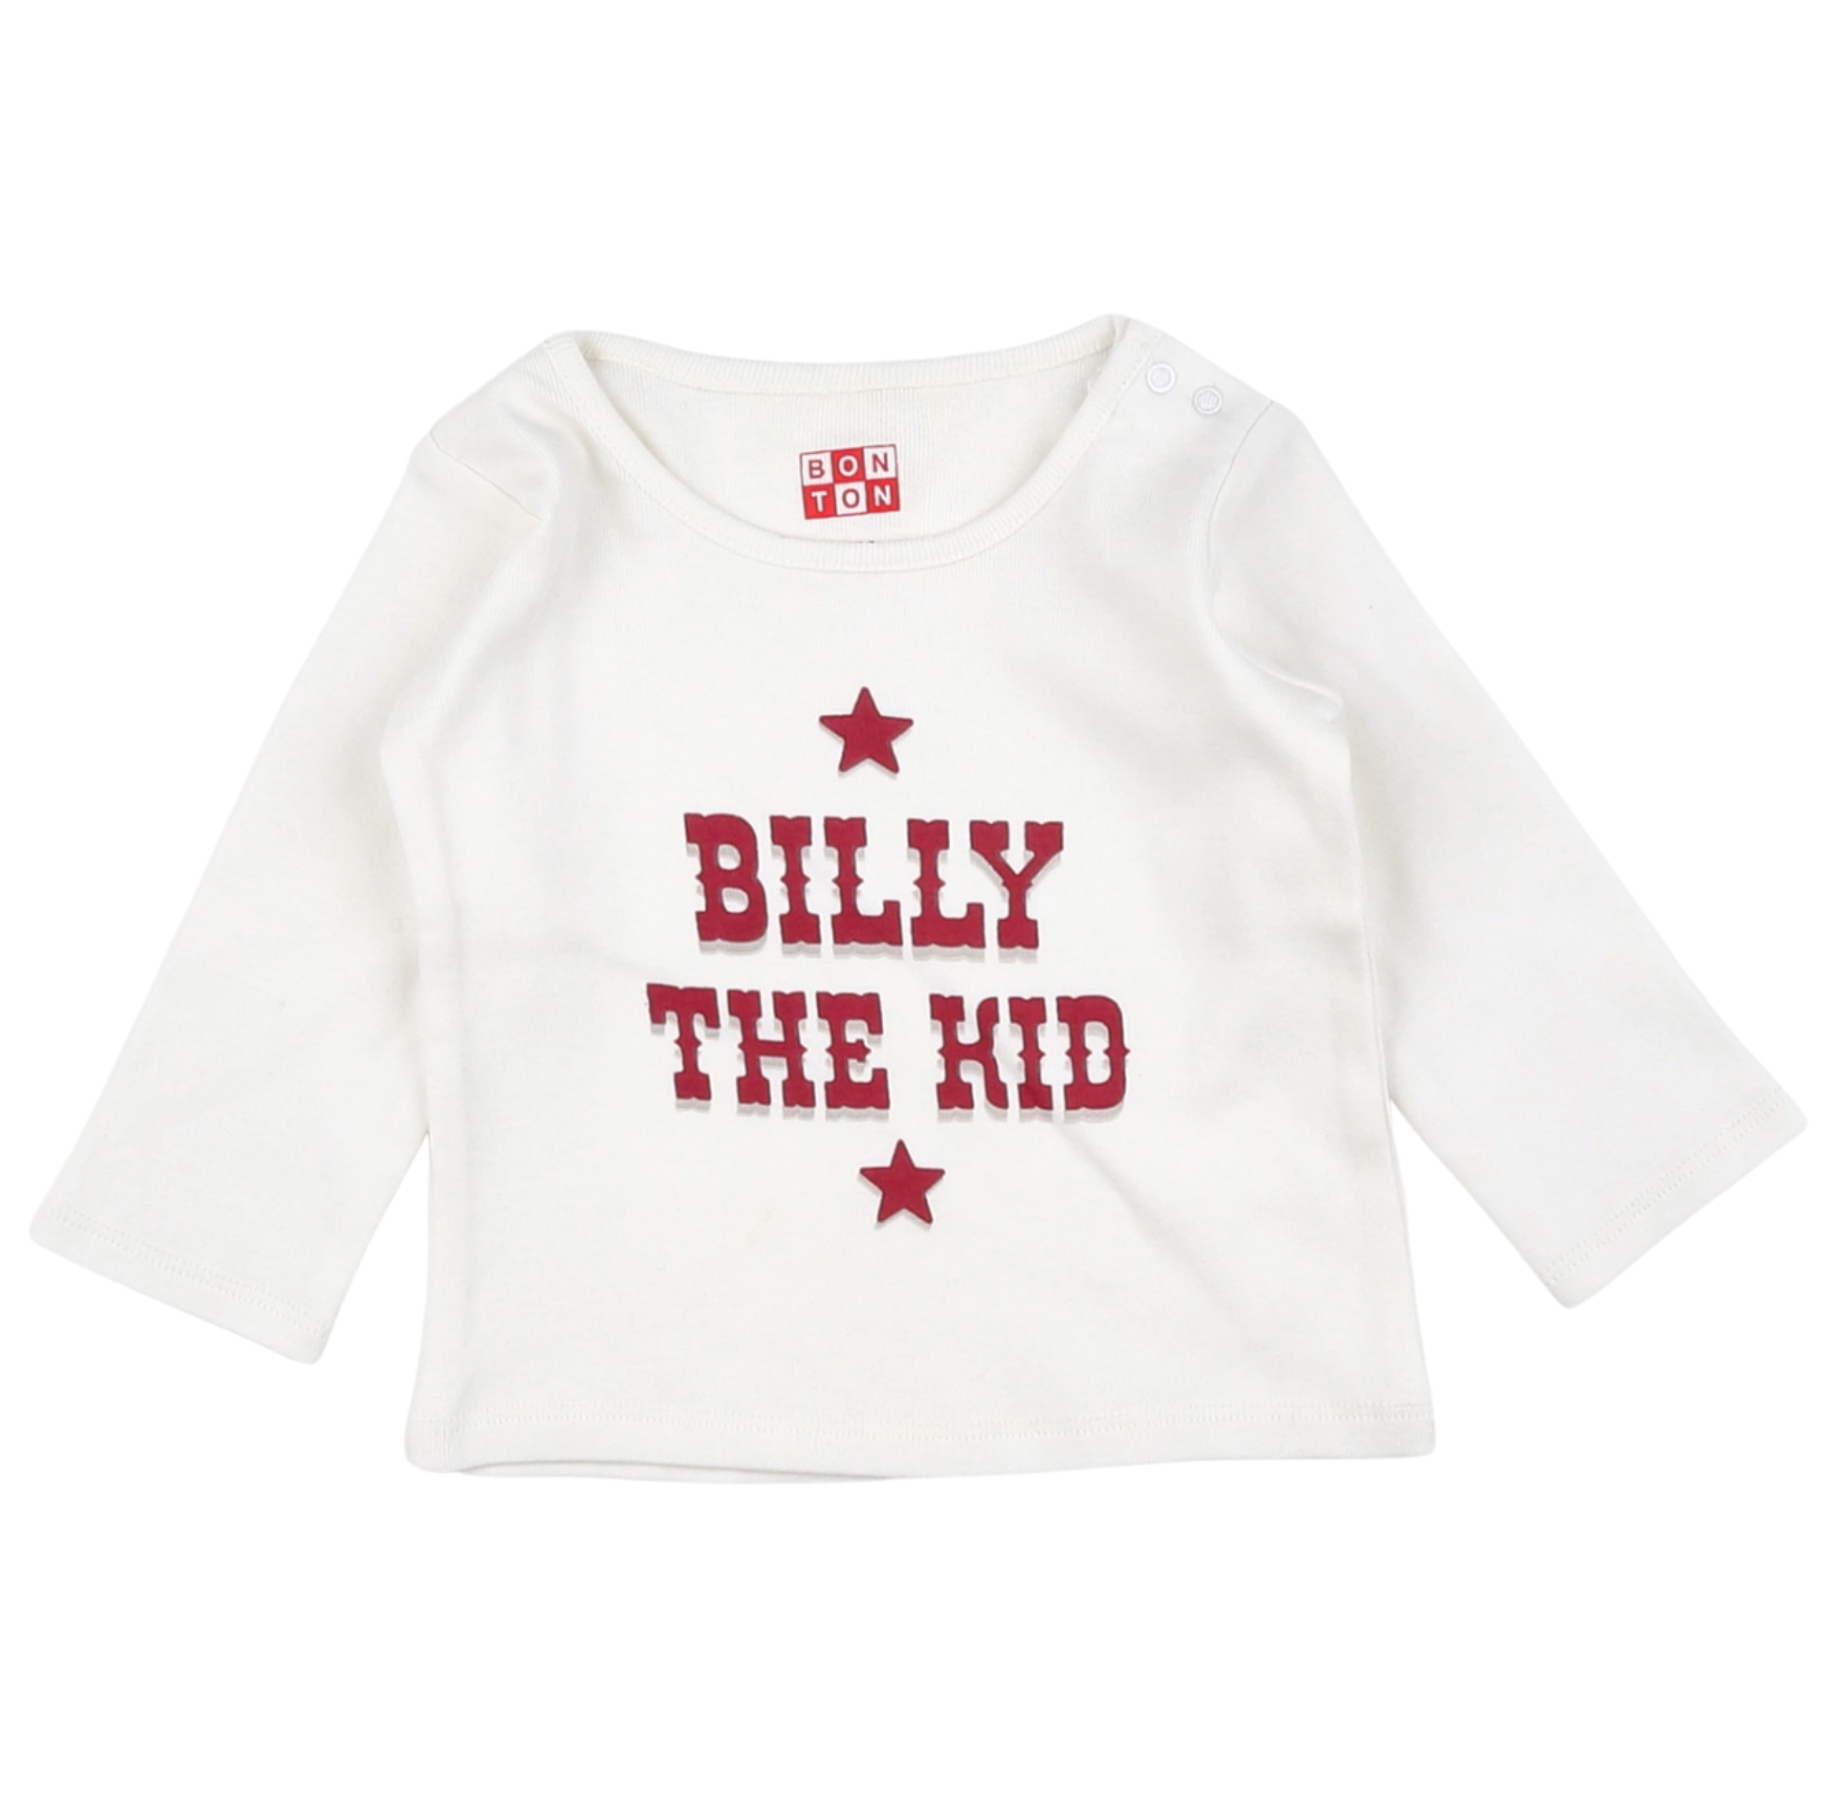 BONTON - "Billy the kid" T-shirt - 6 months